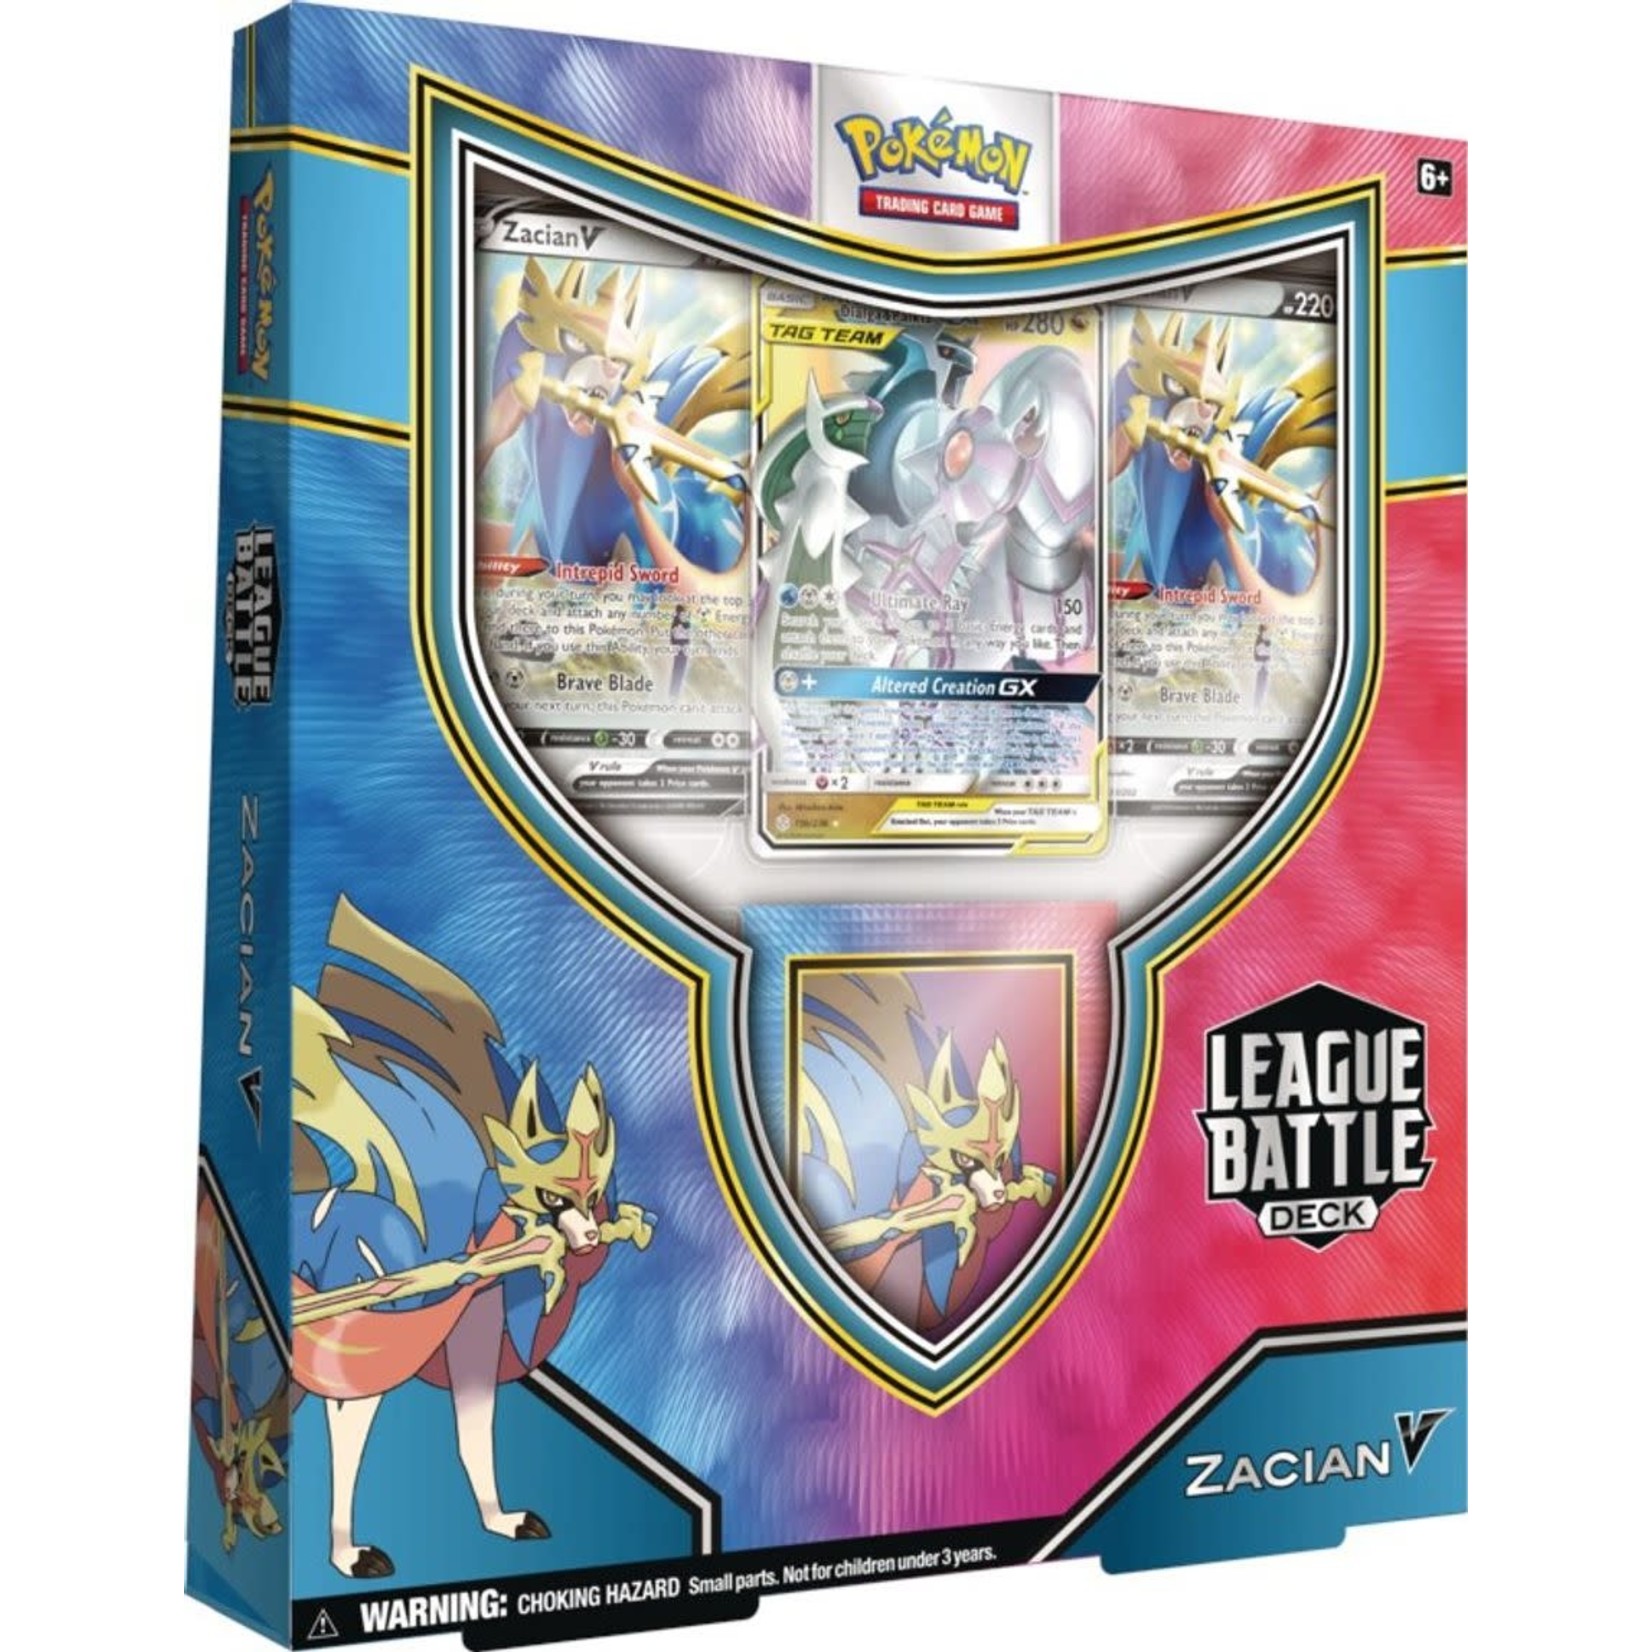 Pokemon TCG: League Battle Deck [Zacian V]